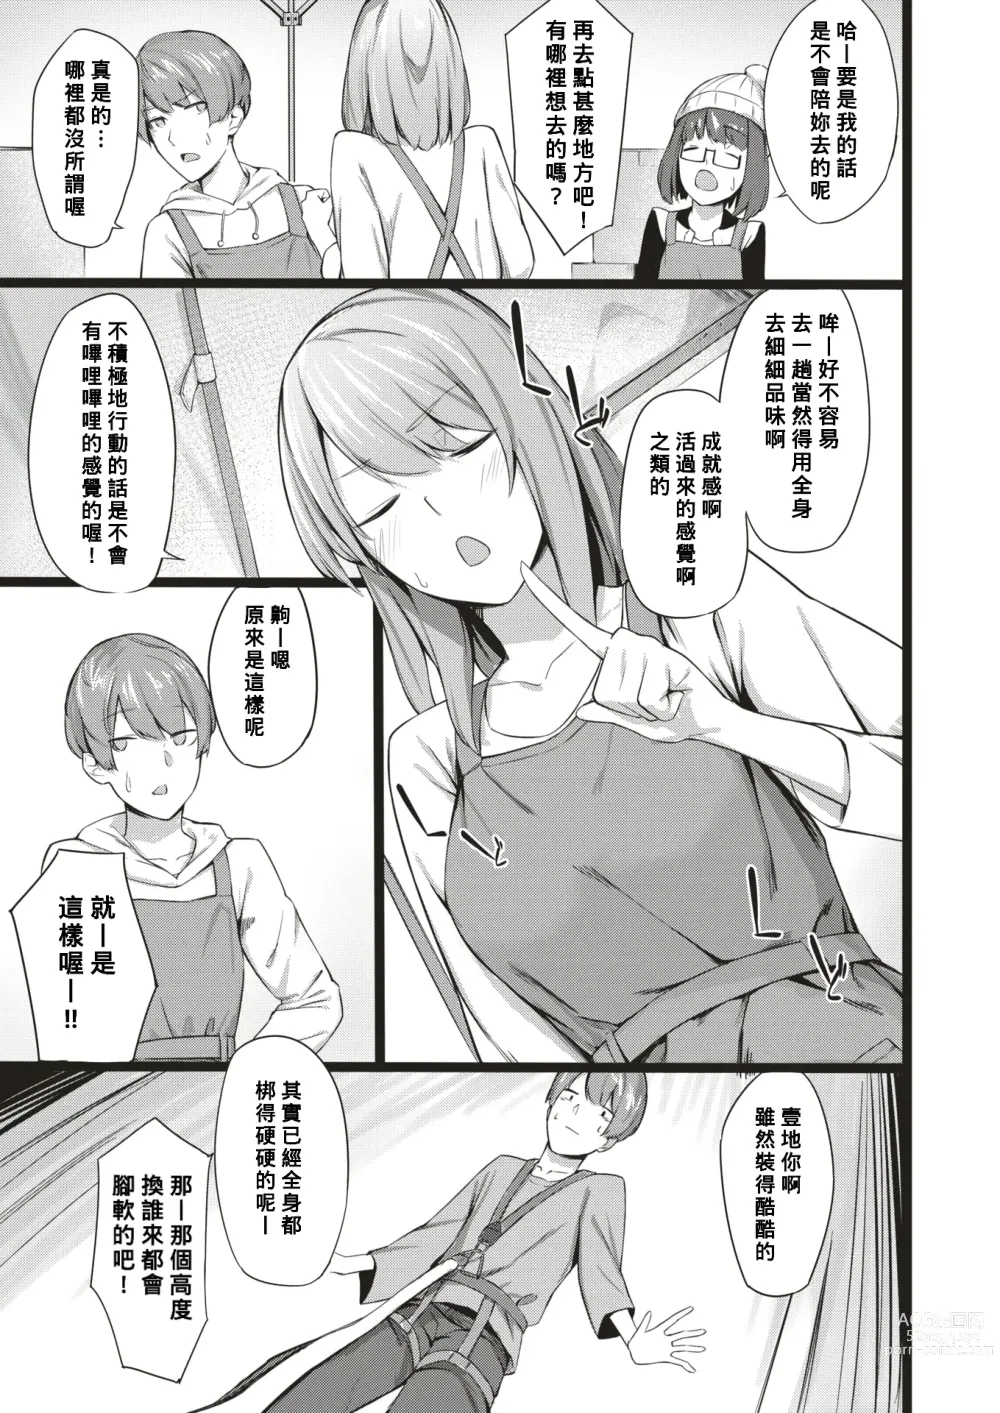 Page 3 of manga Koukai Kakurenbo - What is inside the secret hole?